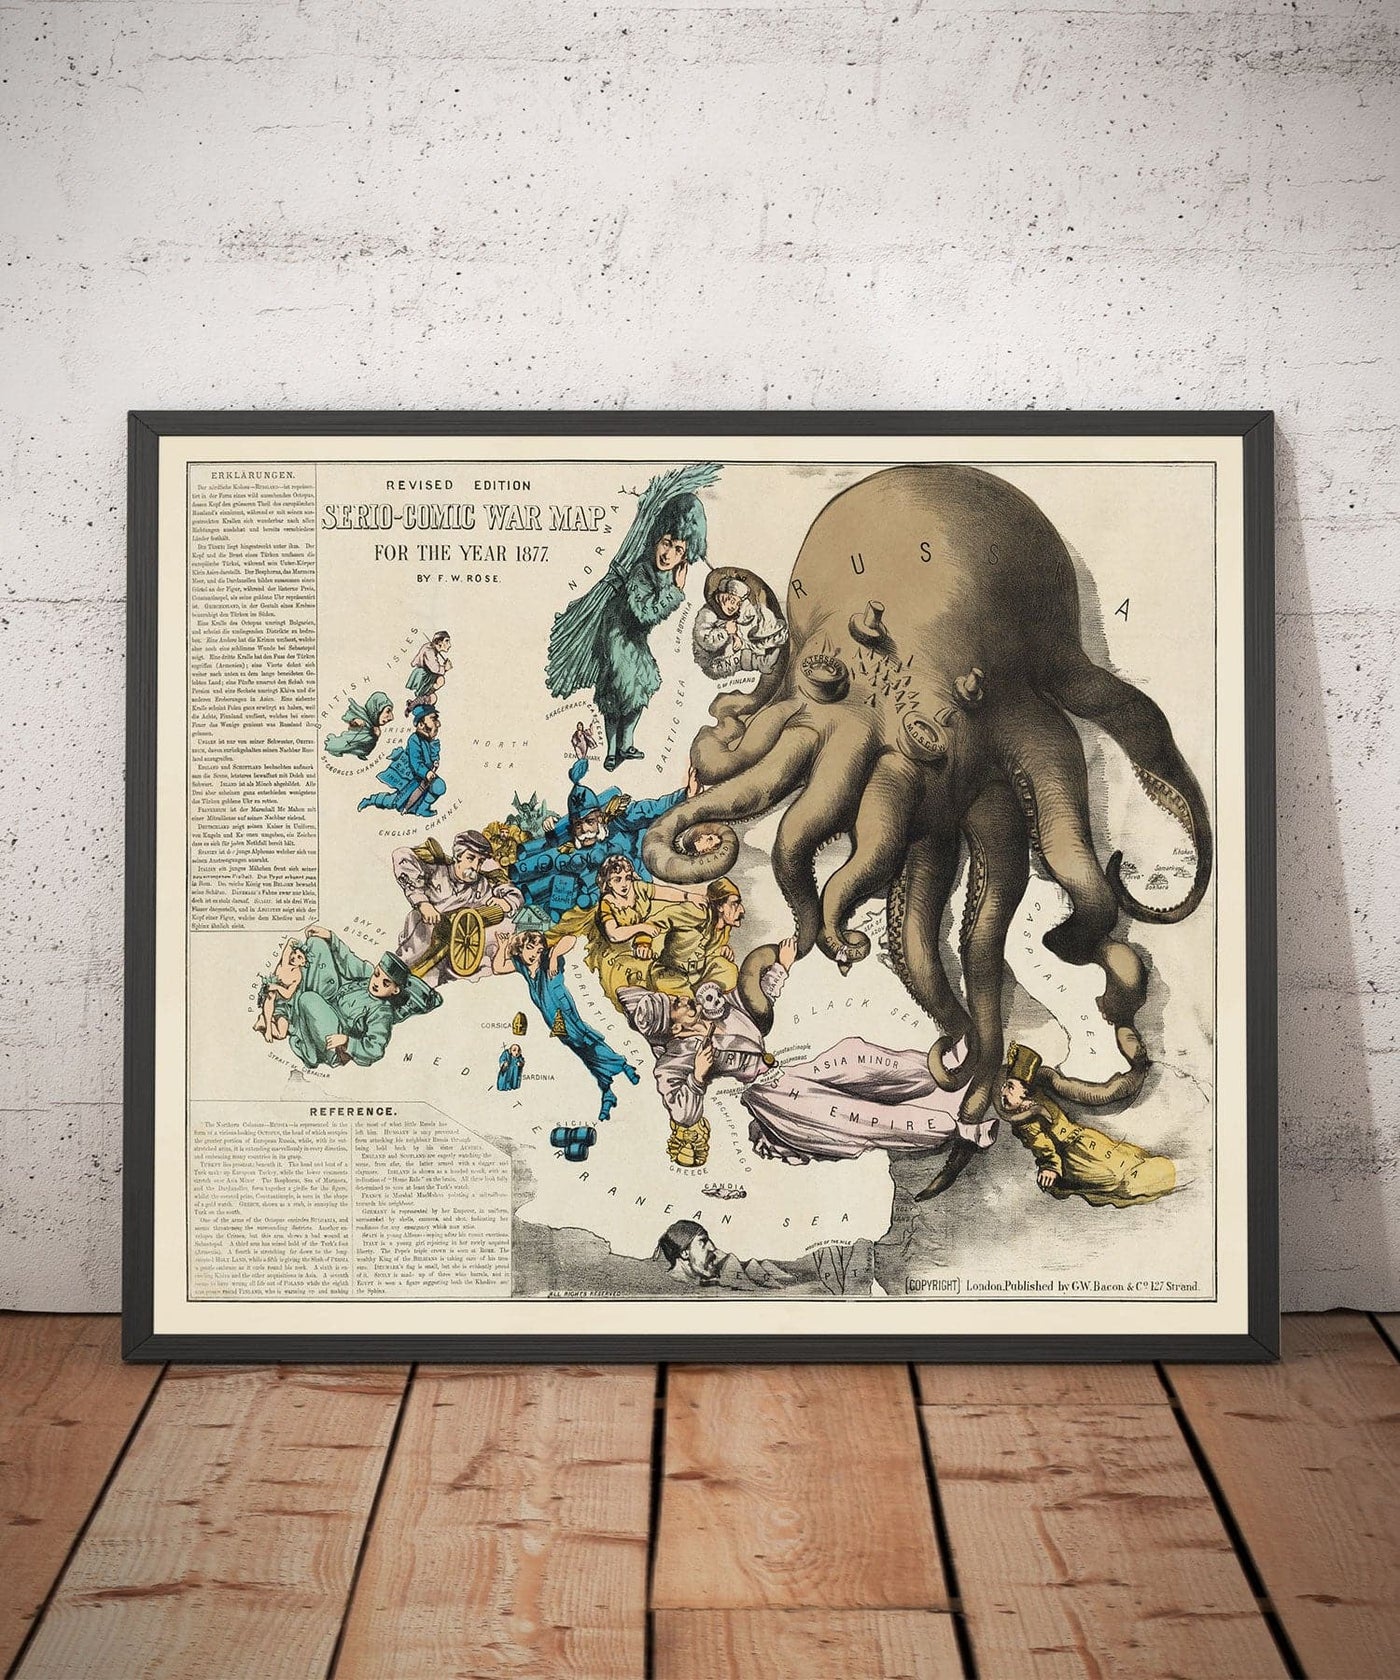 Old Satirical Map of Europe, 1877 by Fredrick Rose - 19th Century Propaganda Serio-Comic, Octopus Russian vs. Ottoman Empires